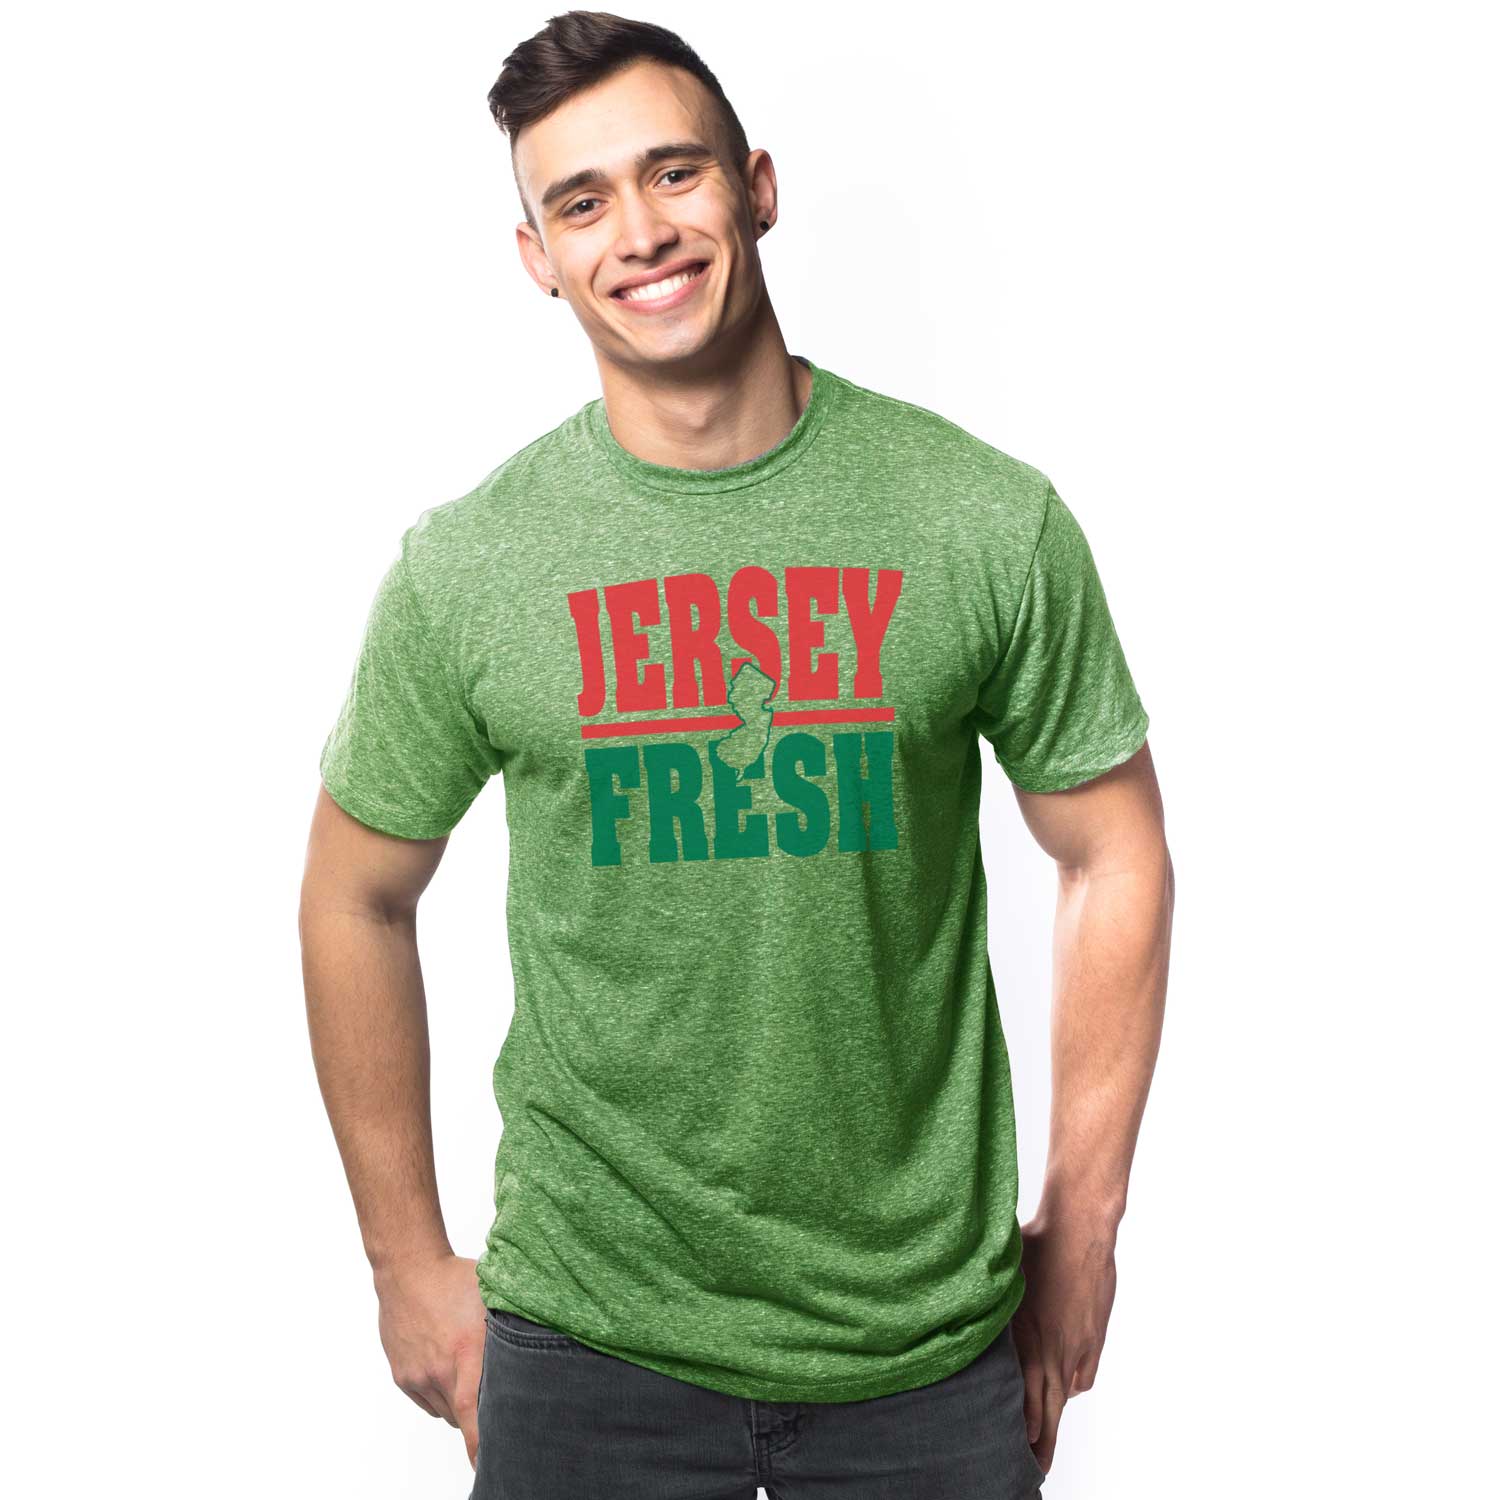 Men's Jersey Fresh Vintage Graphic Tee | Retro Garden State Pride T-Shirt on Model | Solid Threads